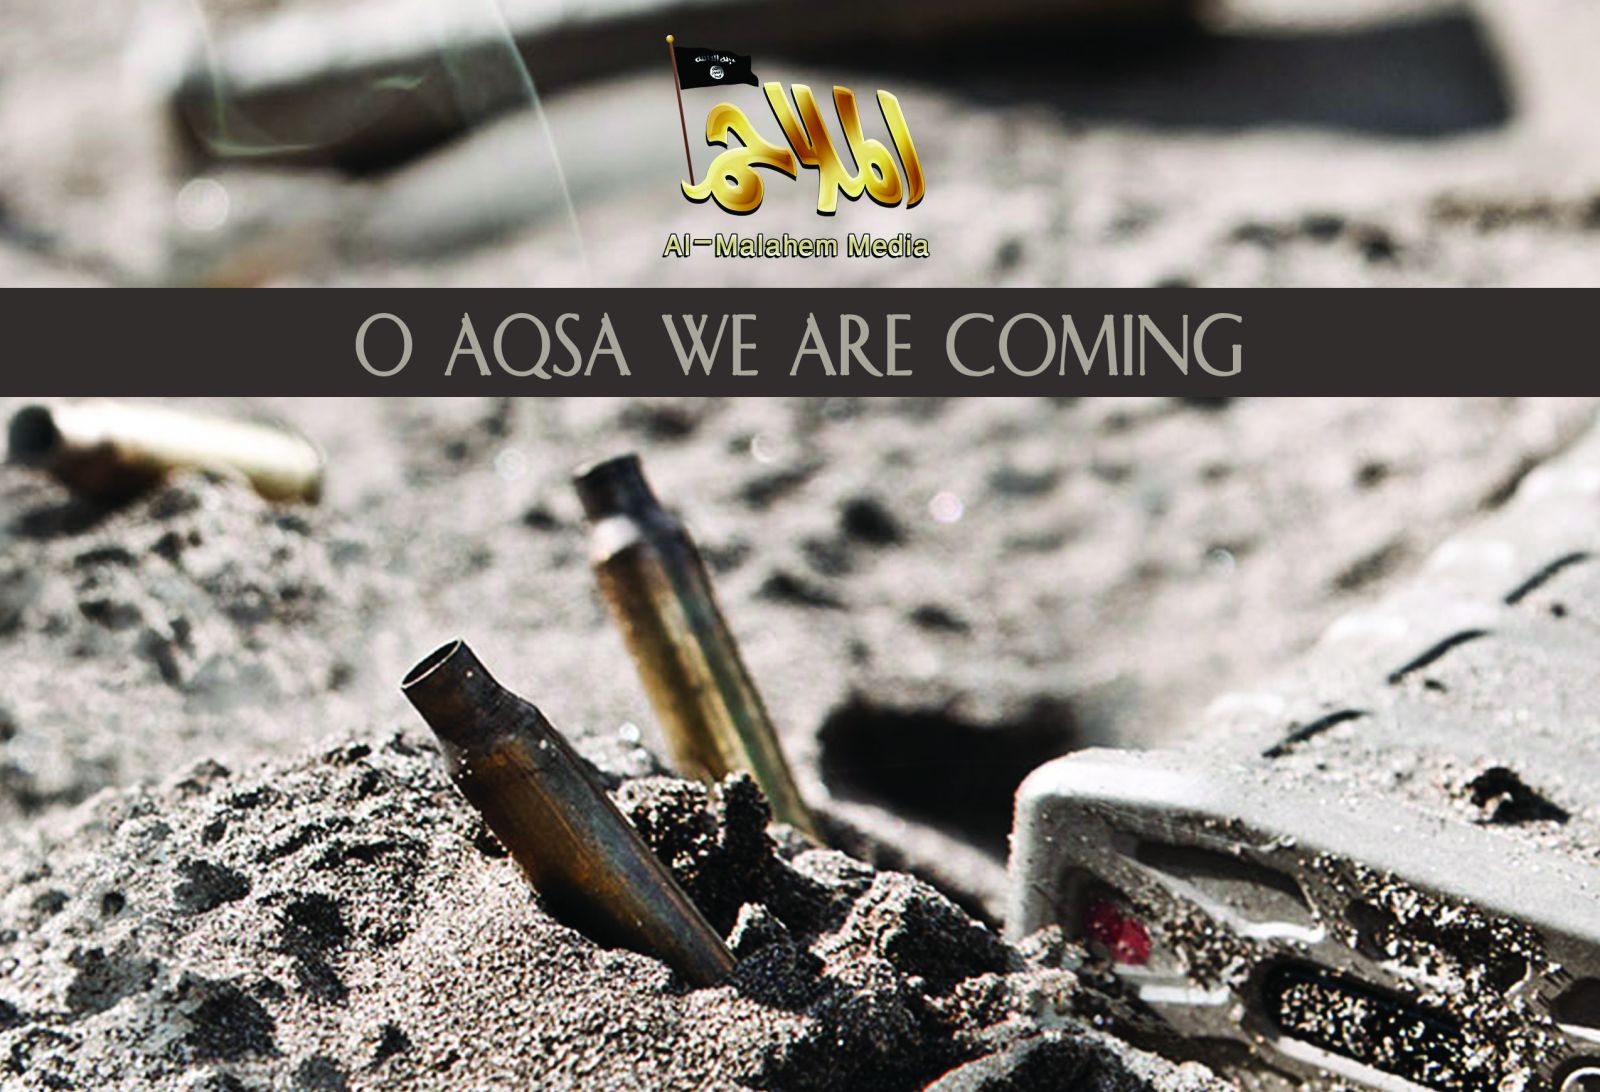 Al-Qaeda’s Inspire magazine on Jerusalem’s al-Aqsa Mosque. Image from Al-Malahem Media.